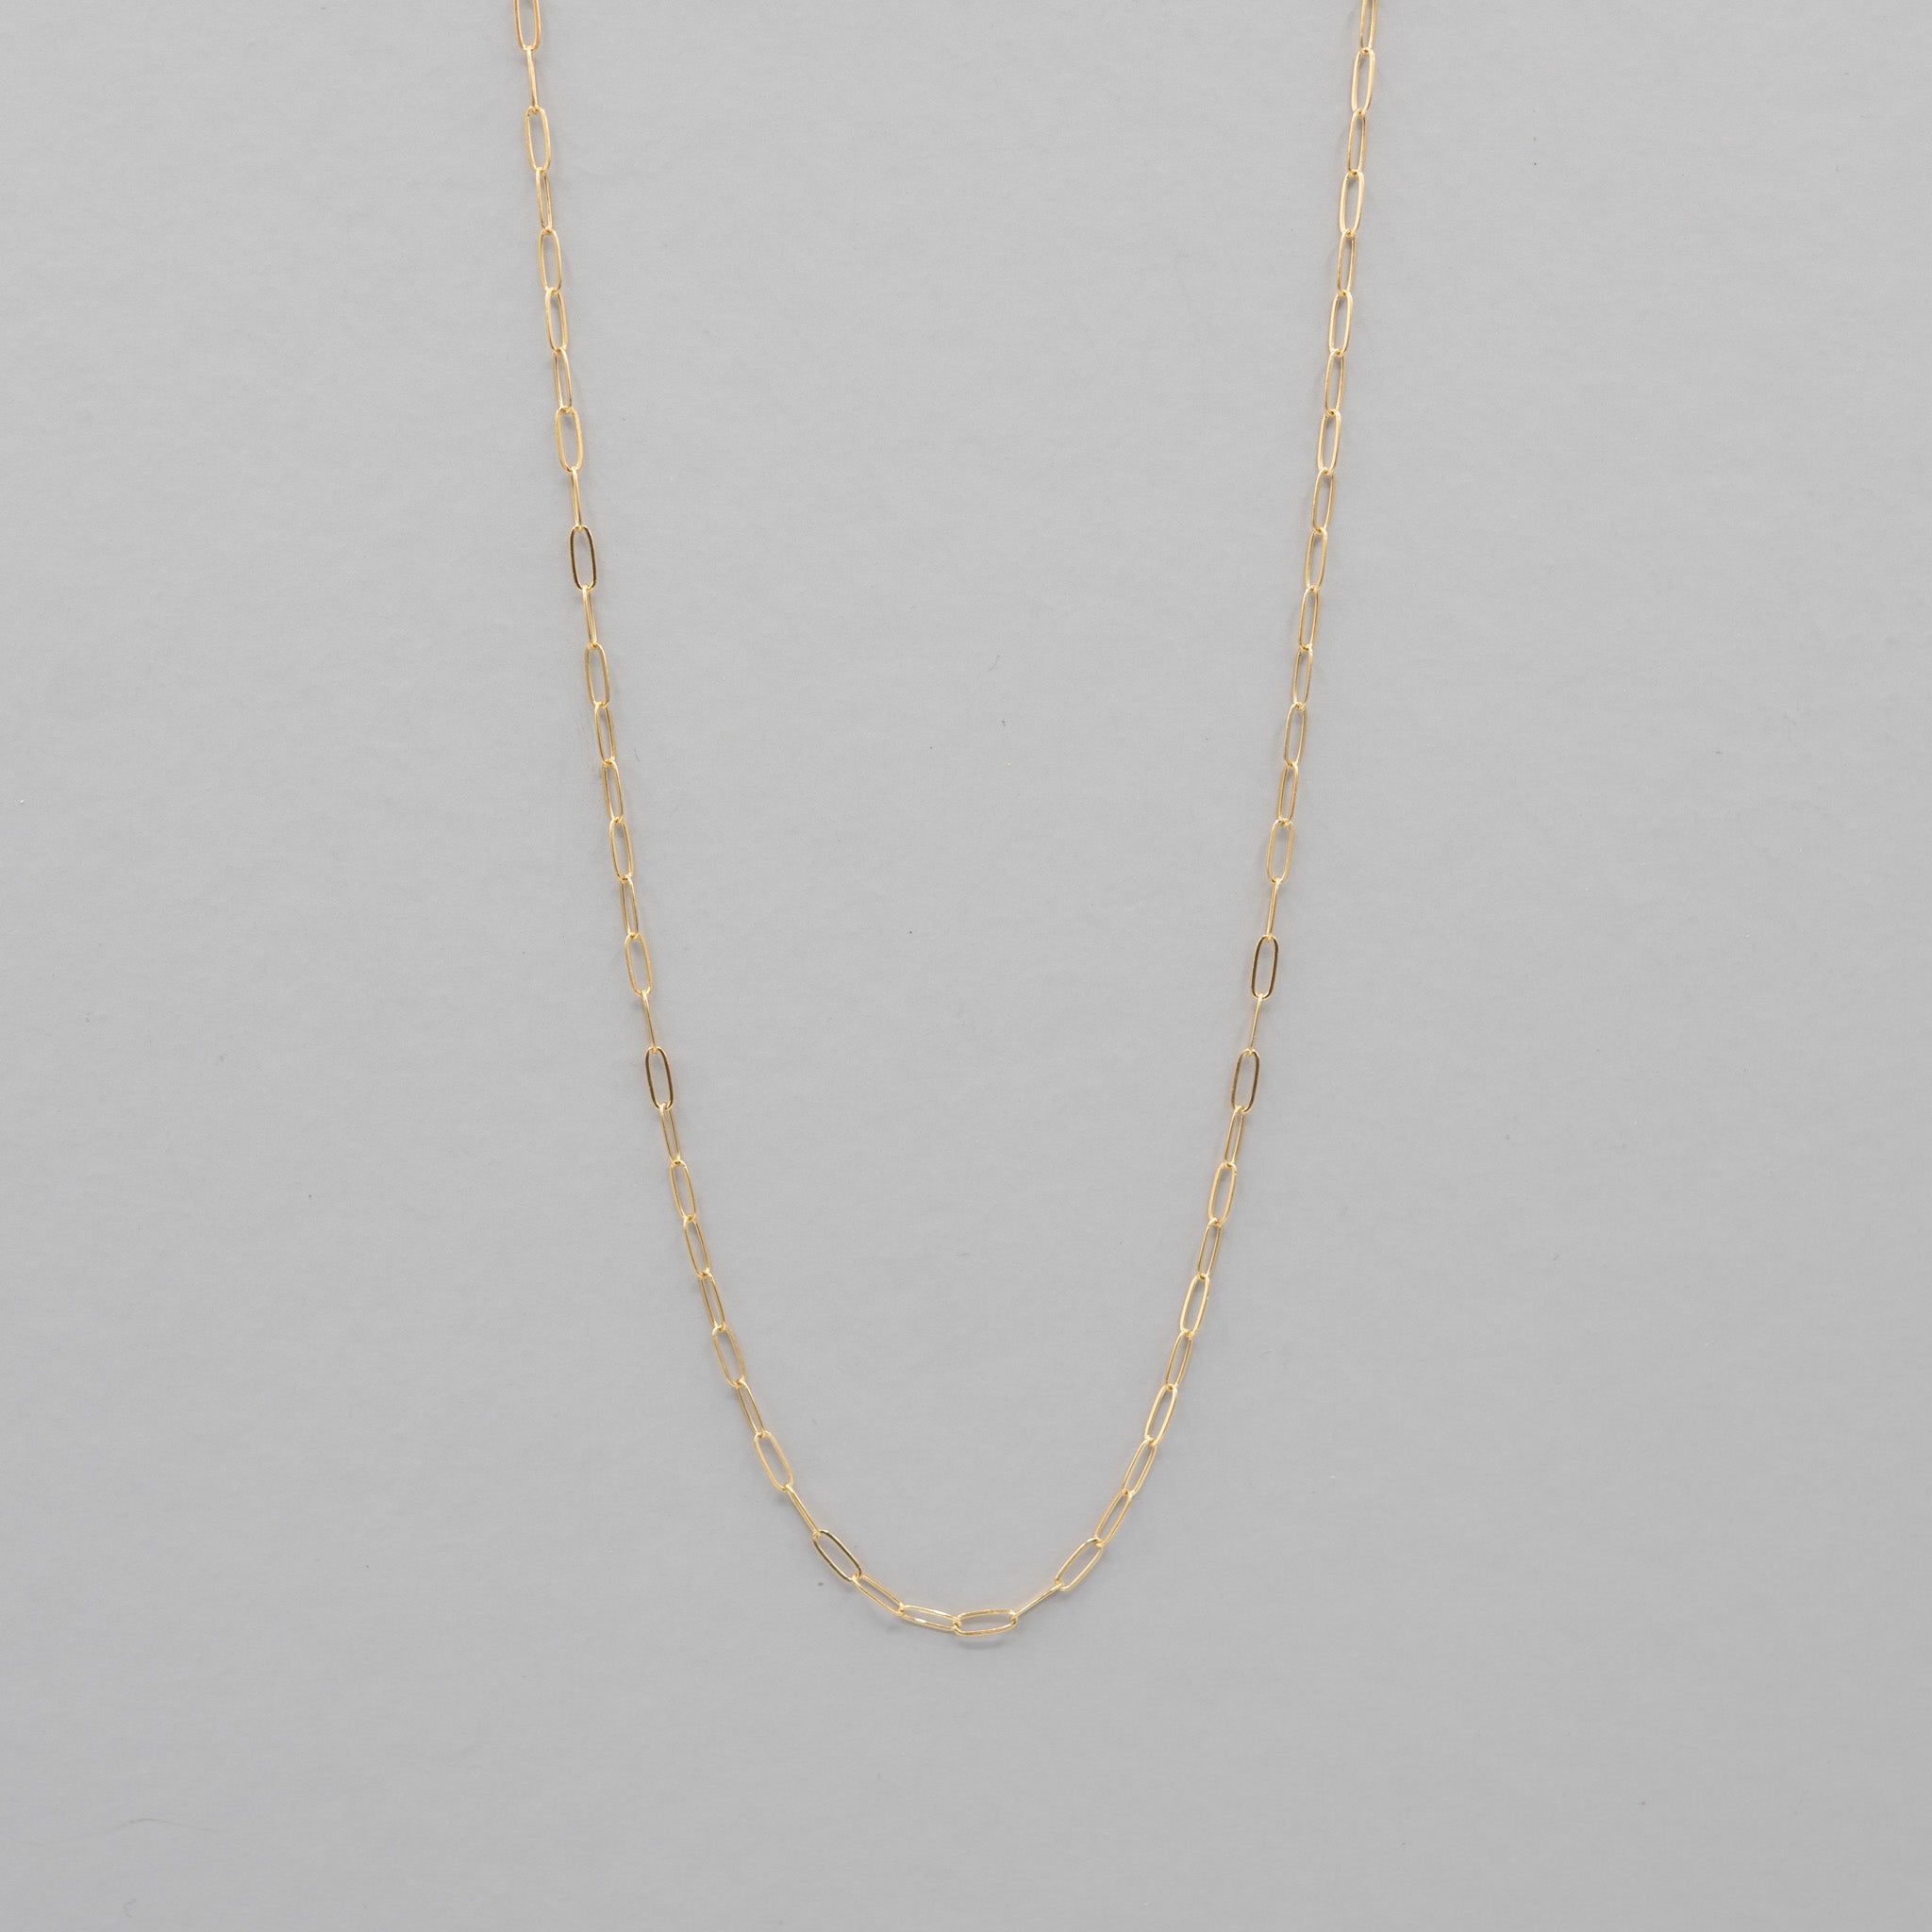 14k Gold Filled Petite Paper Clip Layering Chain - Jewel Ya